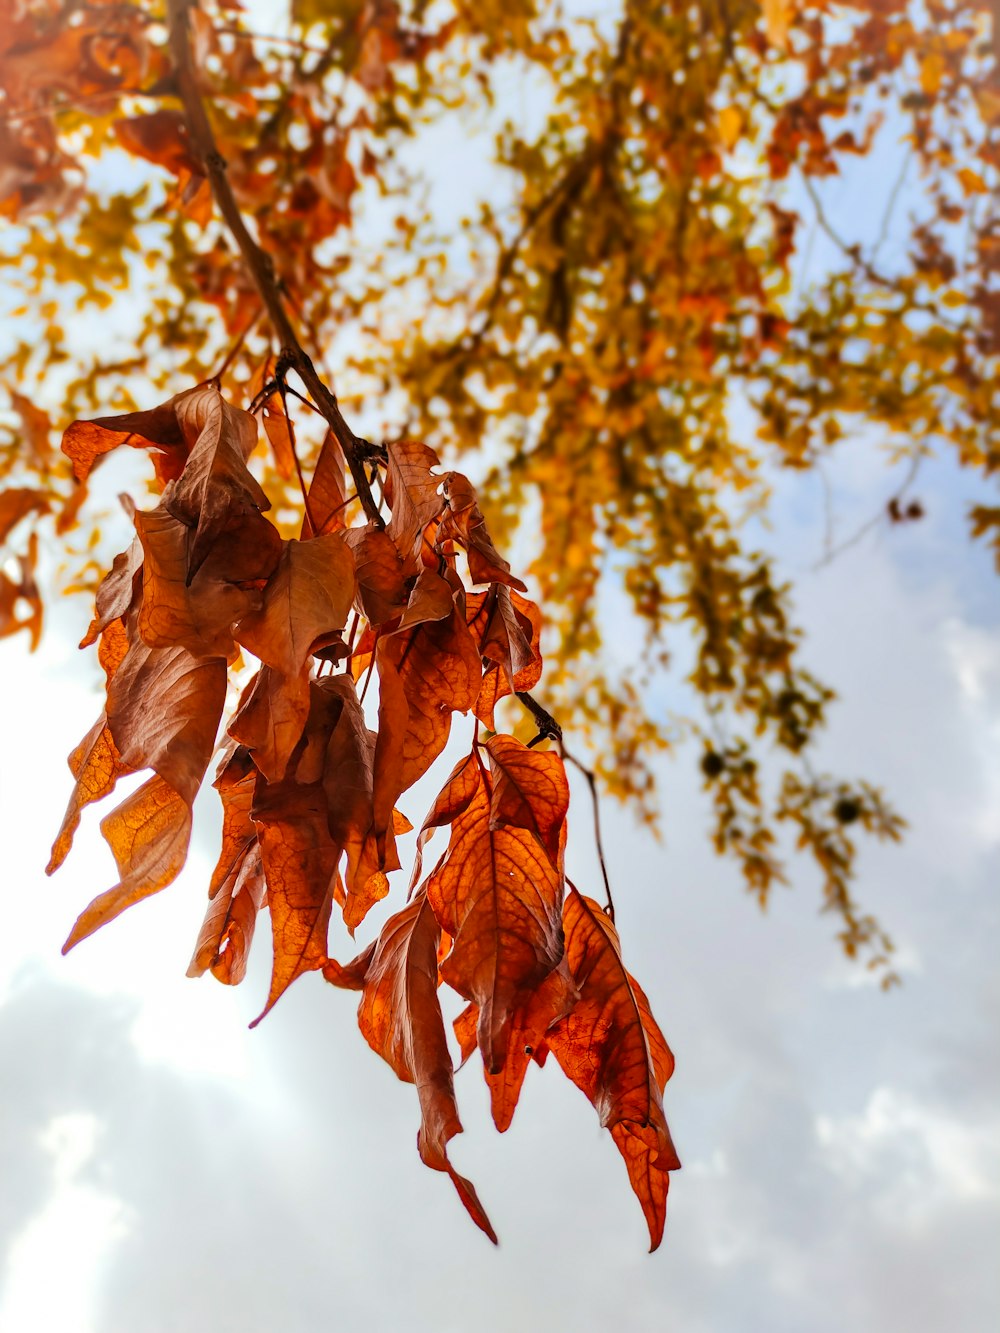 brown leaves under blue sky during daytime